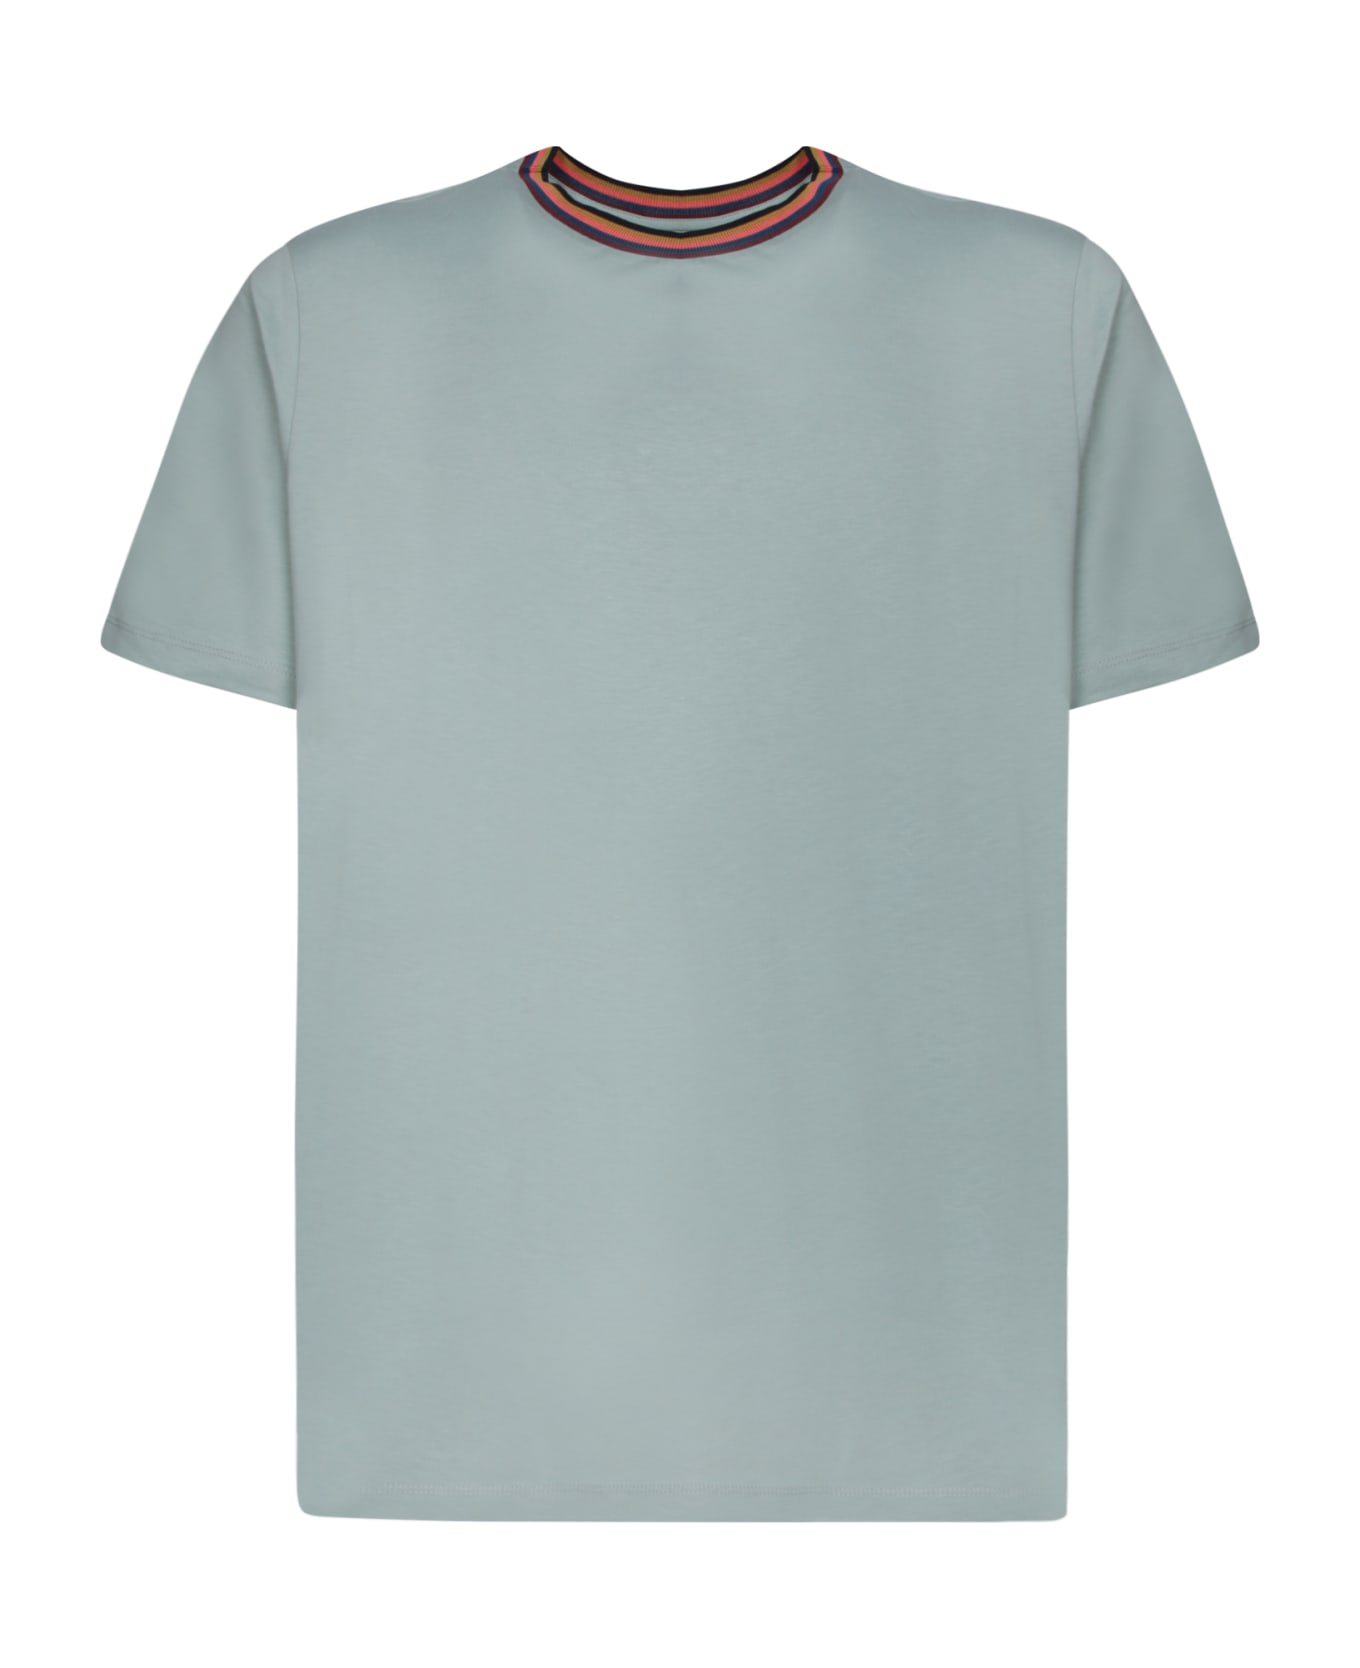 Paul Smith Short Sleeves Mint Green T-shirt - Green